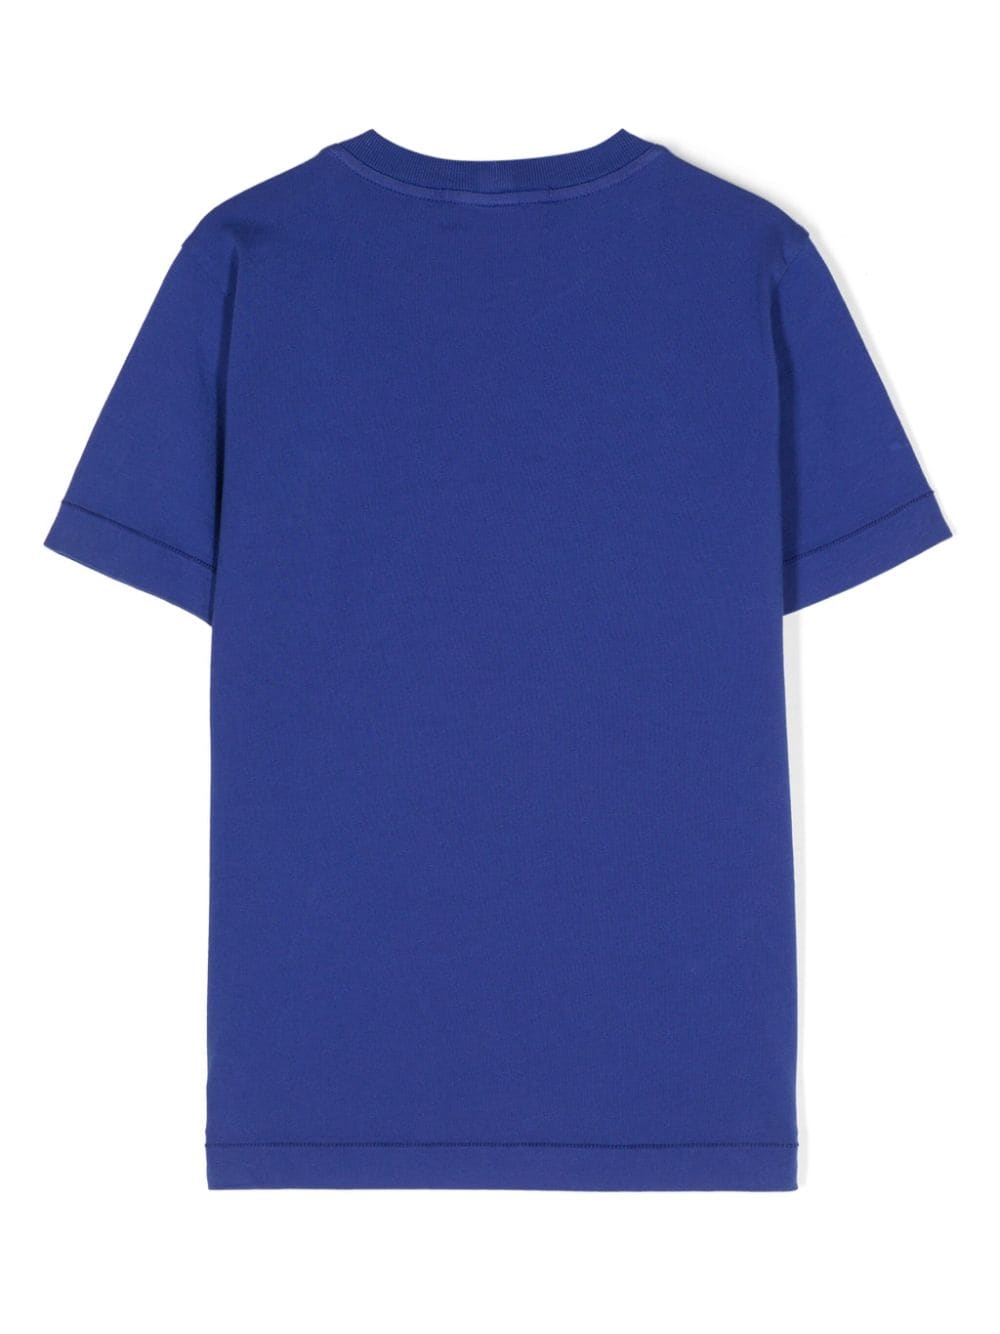 Baby blue cotton t-shirt